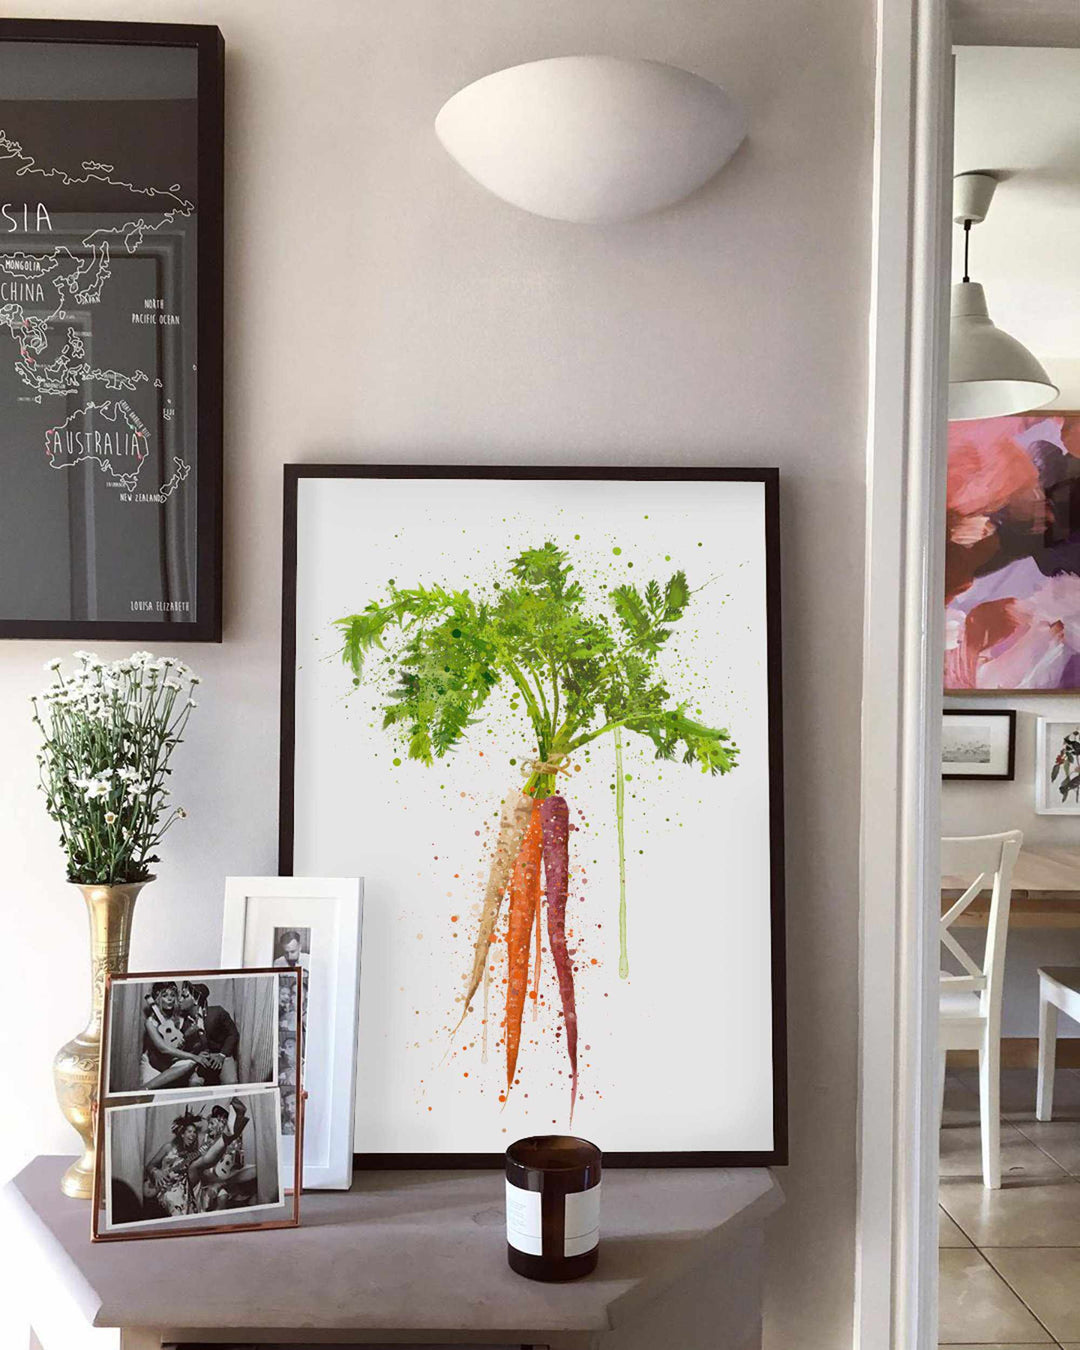 Regenbogen-Karotten-Gemüse-Wand-Kunstdruck